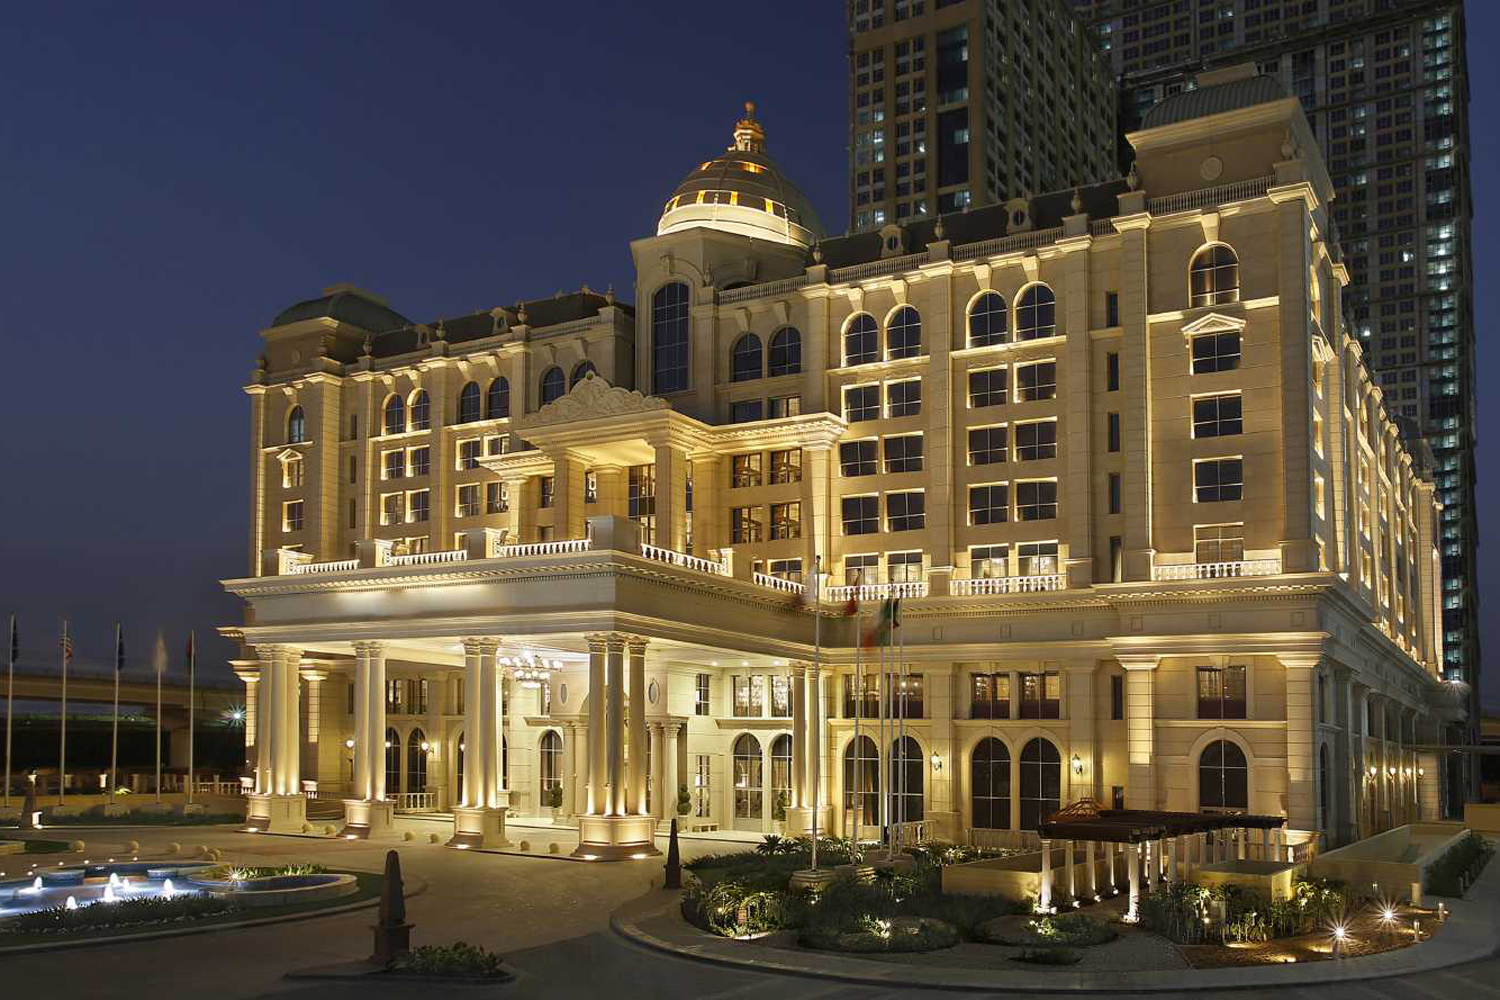 Dubai suhoor 2019: Habtoor Palace Dubai | Ramadan | Time Out Dubai